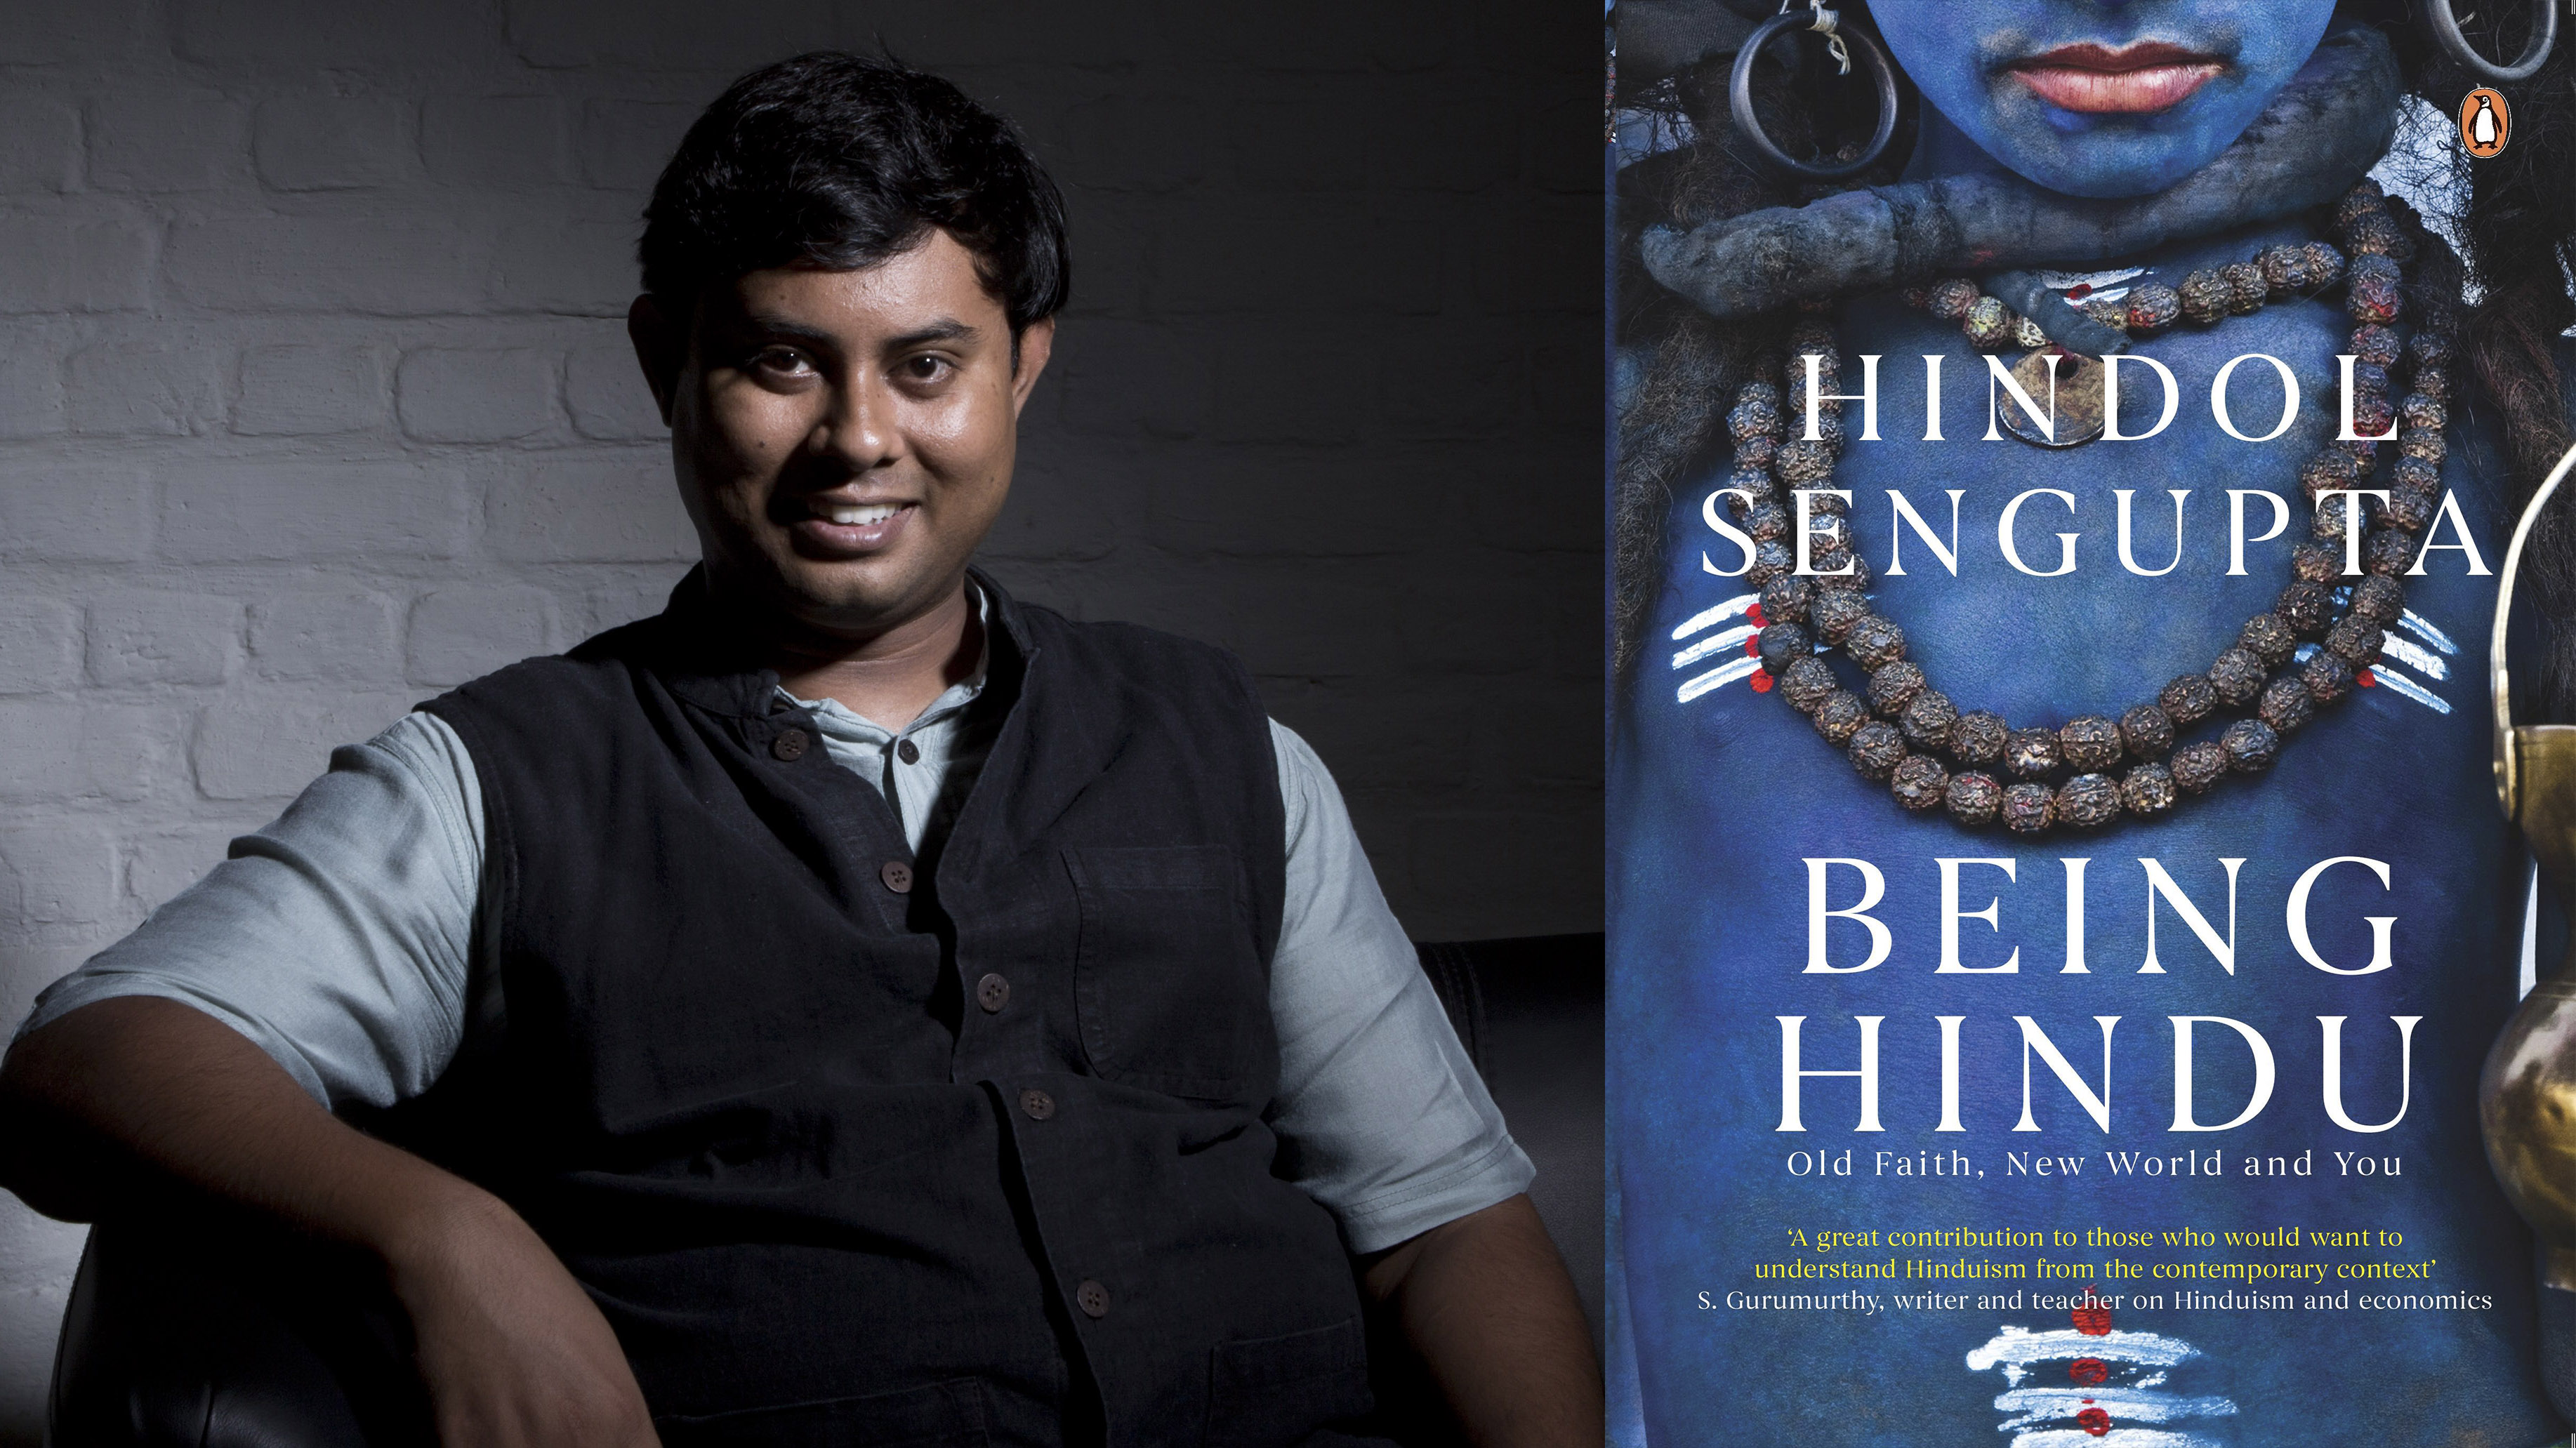 Author Hindol Sengupta with his book BEING HINDU